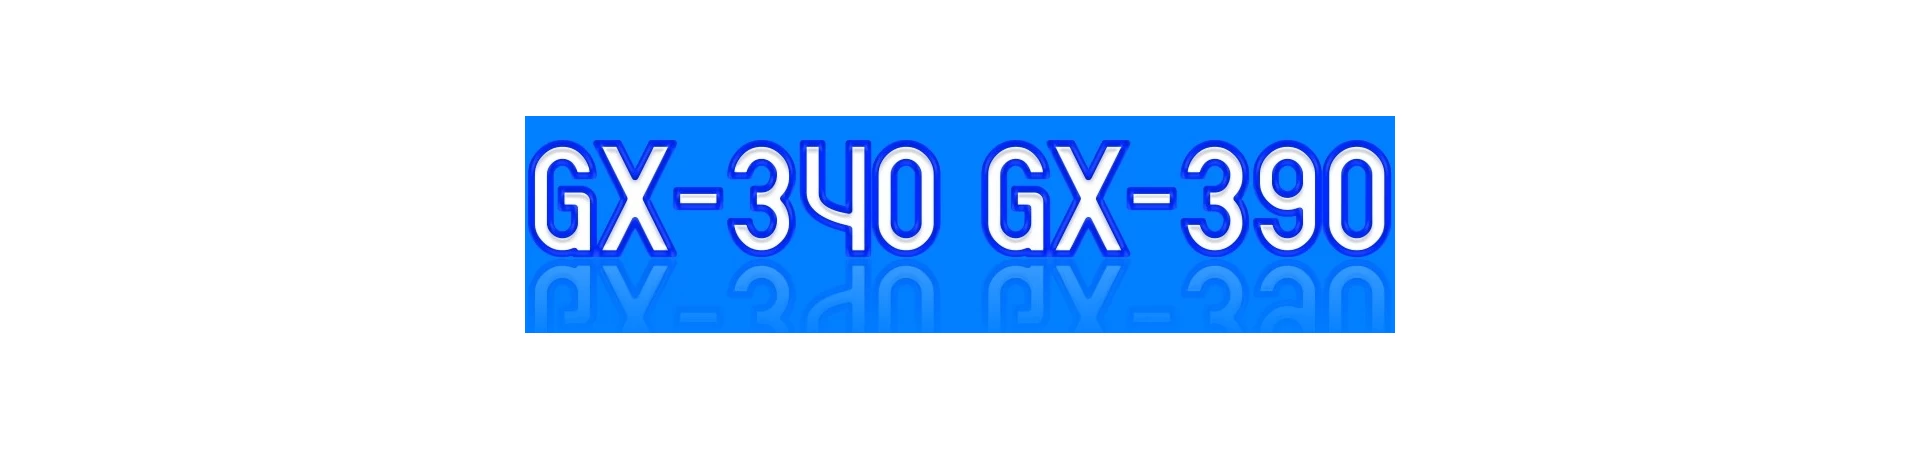 GX340 GX390